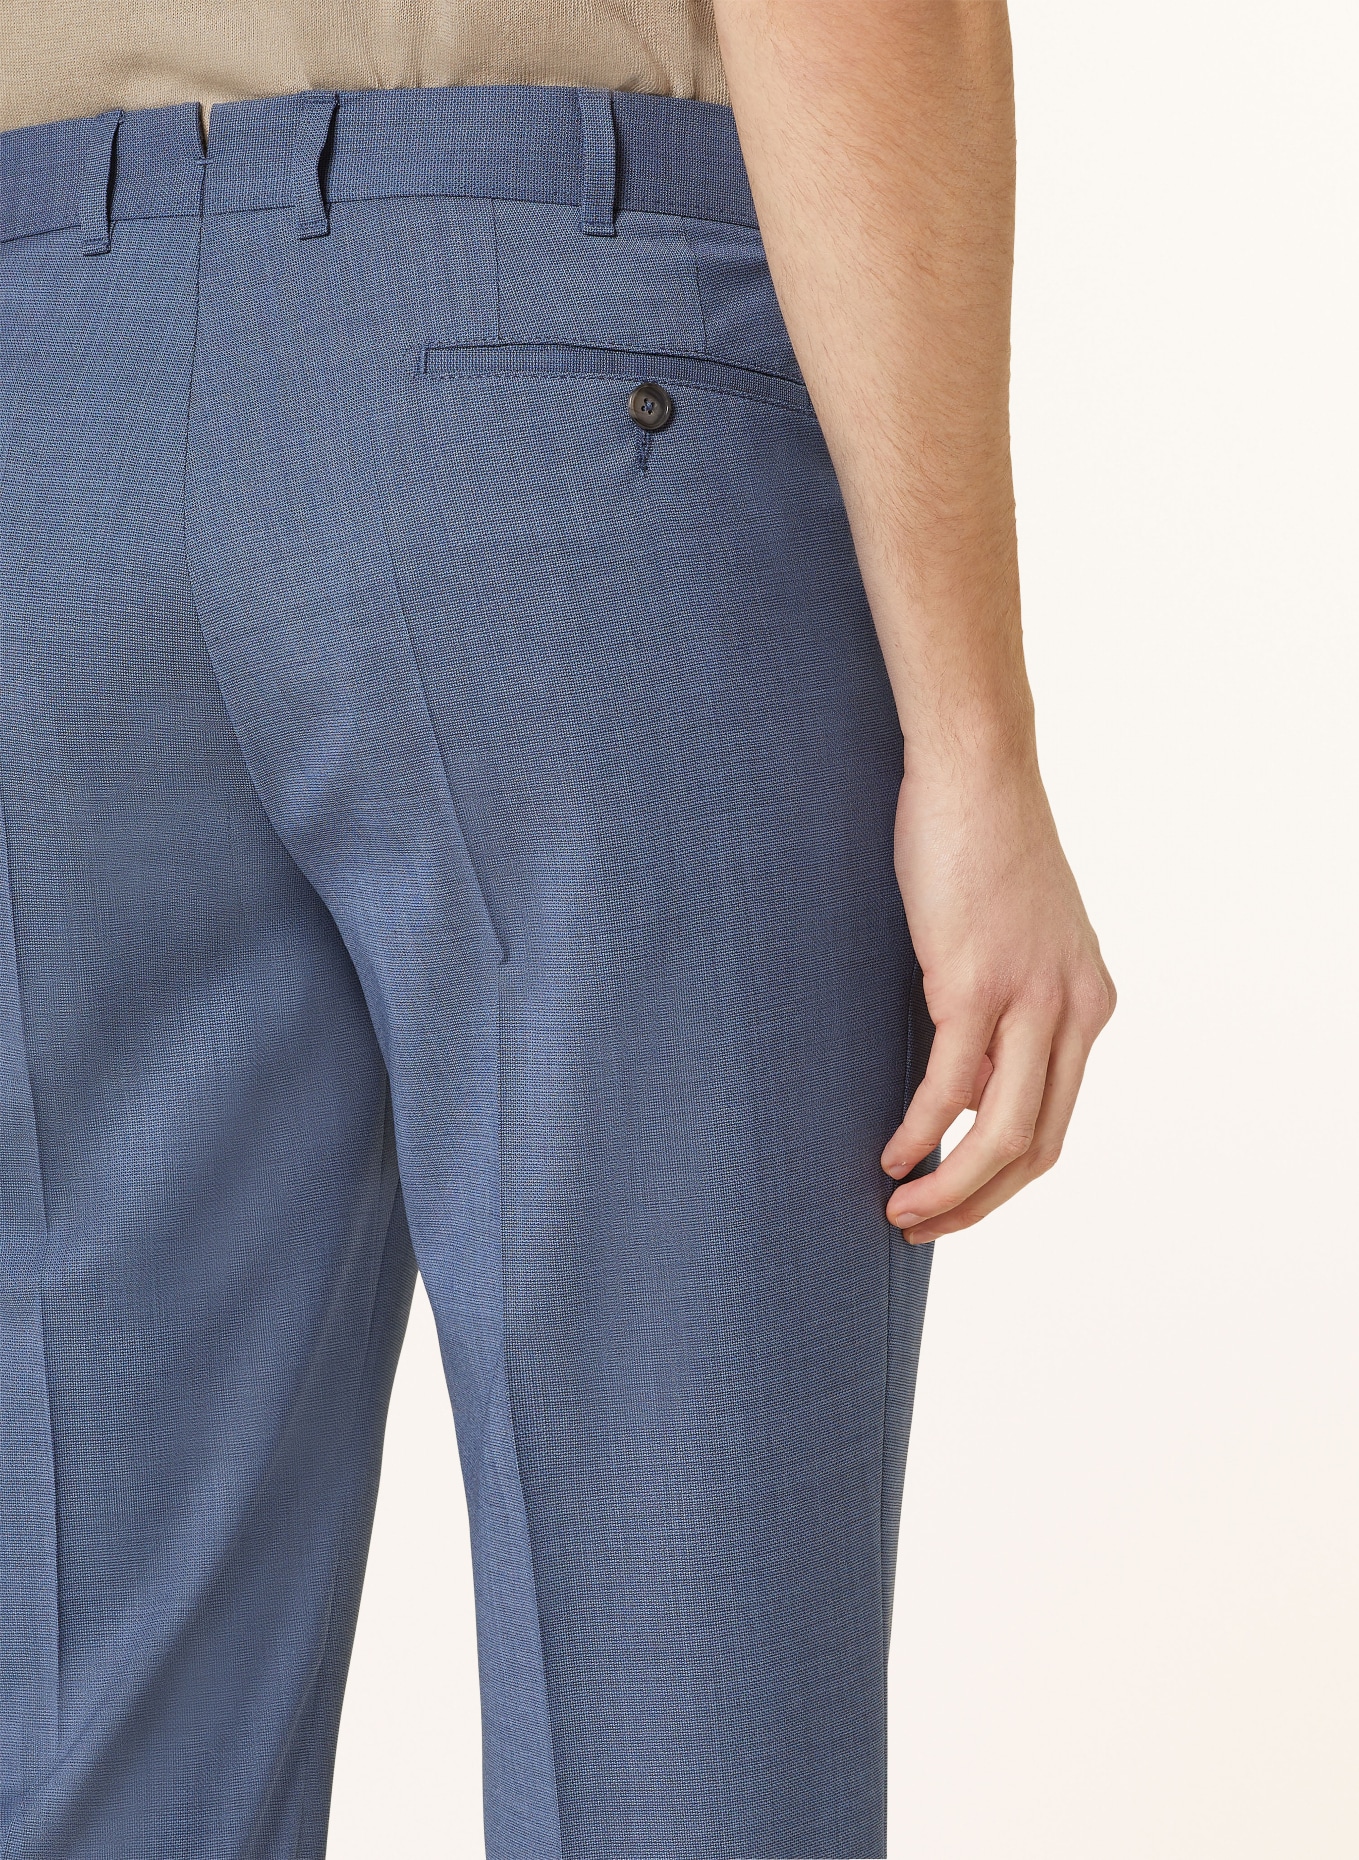 EDUARD DRESSLER Anzughose Slim Fit, Farbe: 036 hellblau (Bild 6)